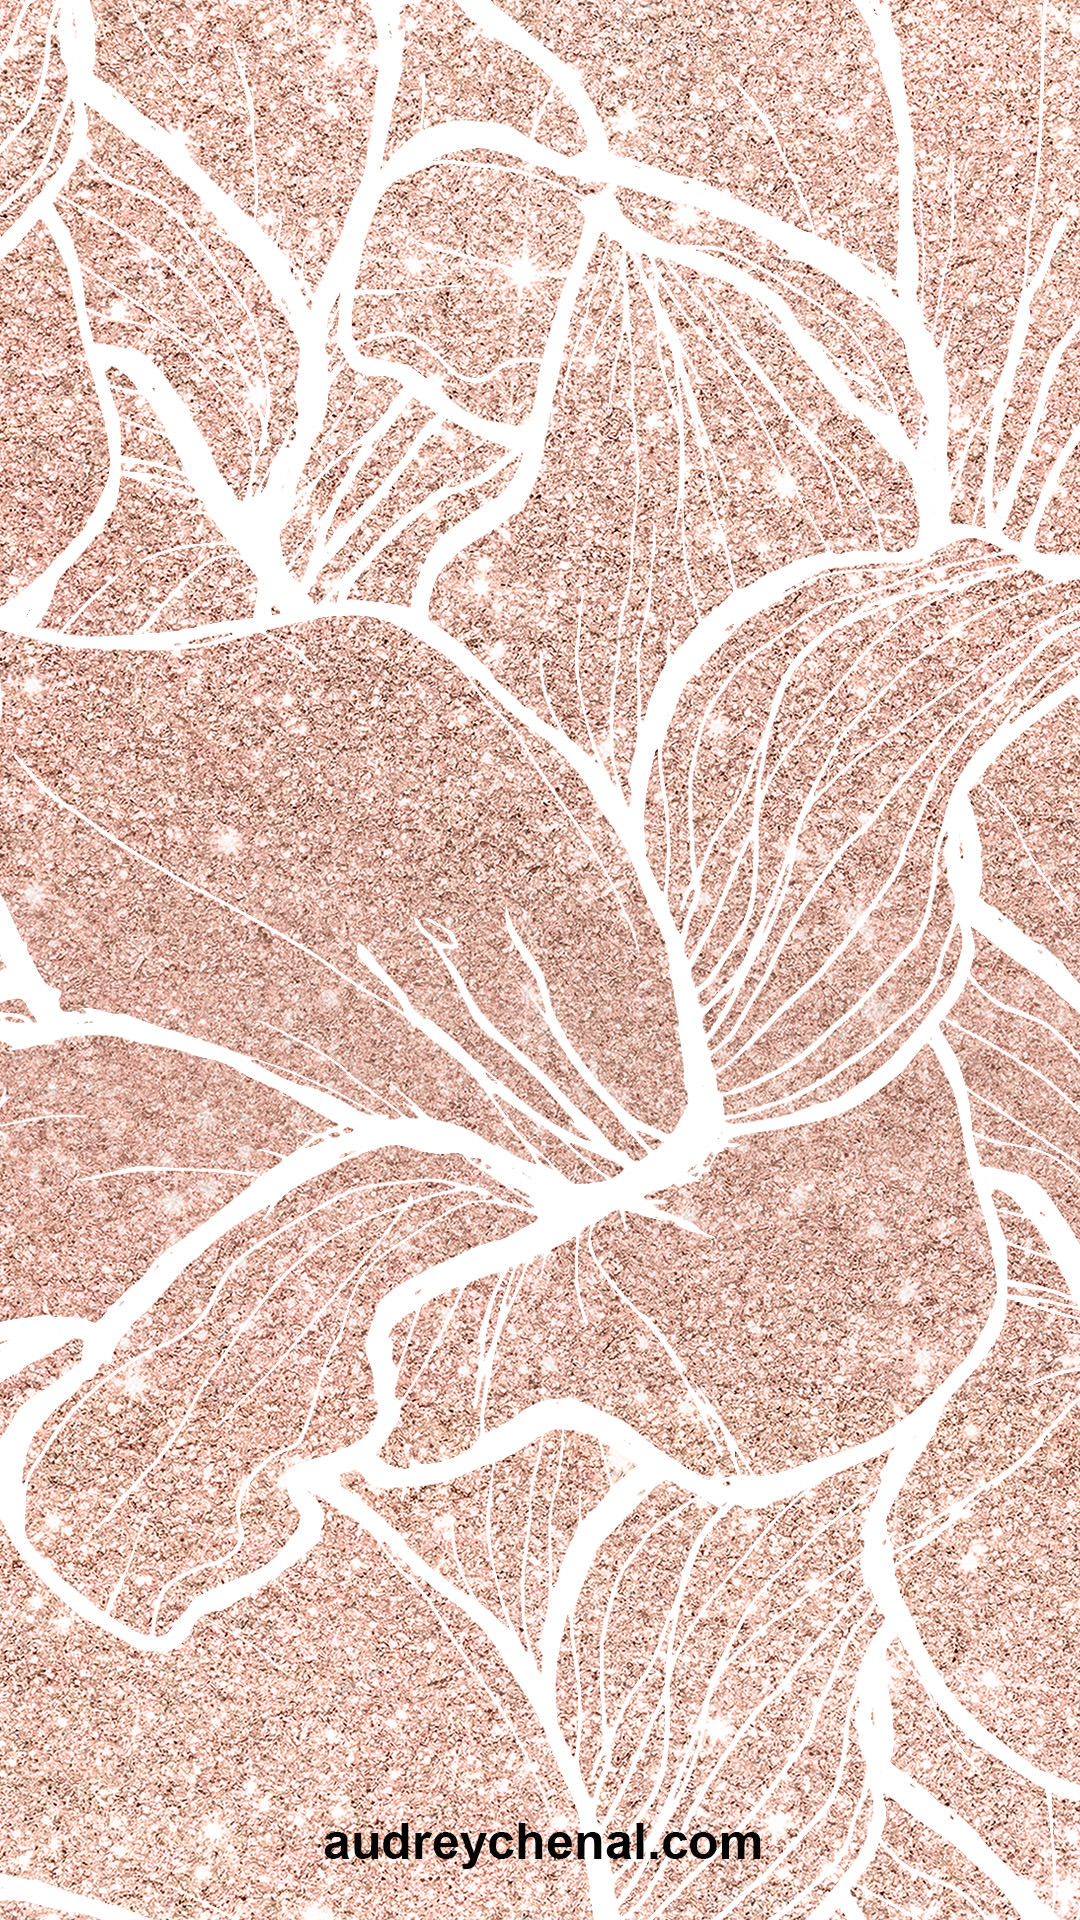 50+ Top Iphone Wallpaper Pink Sand